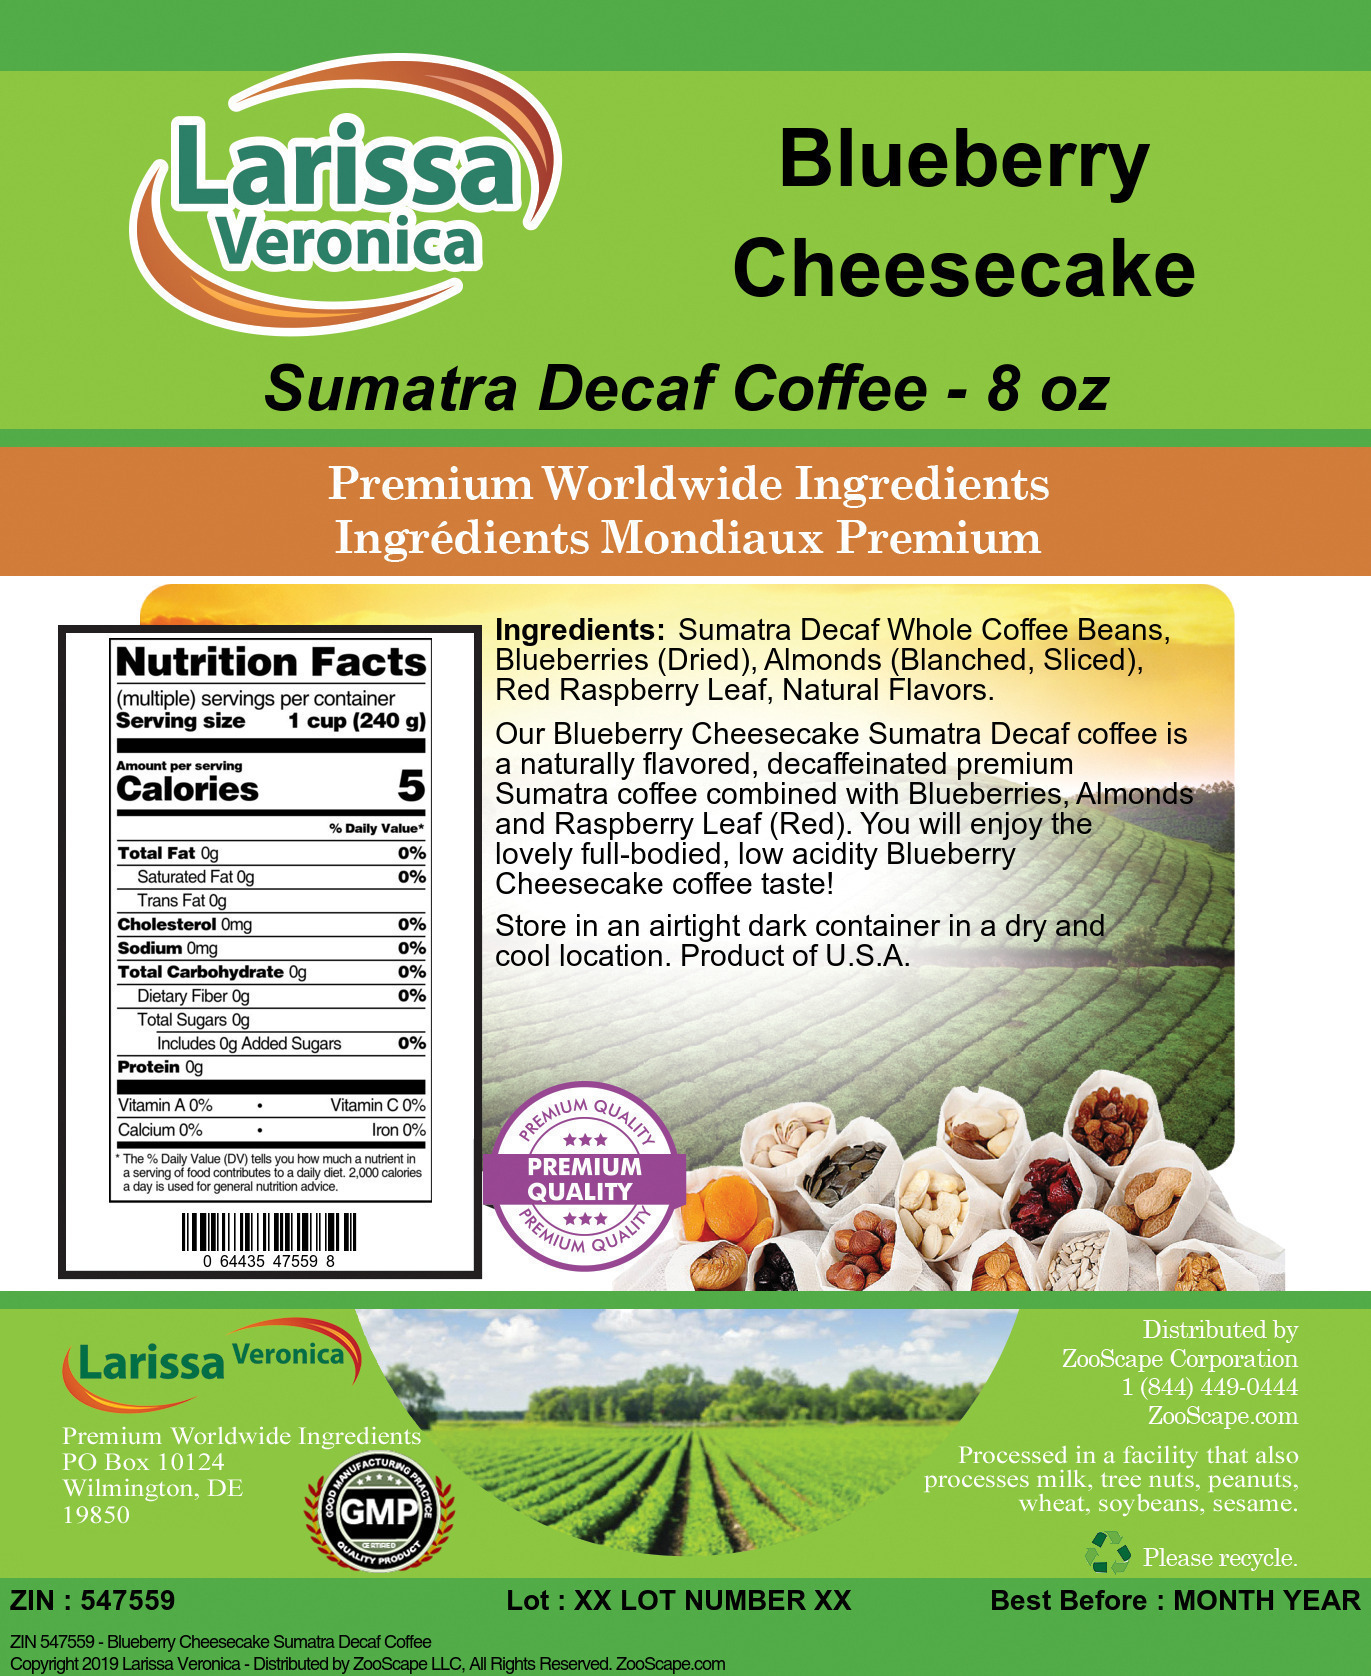 Blueberry Cheesecake Sumatra Decaf Coffee - Label